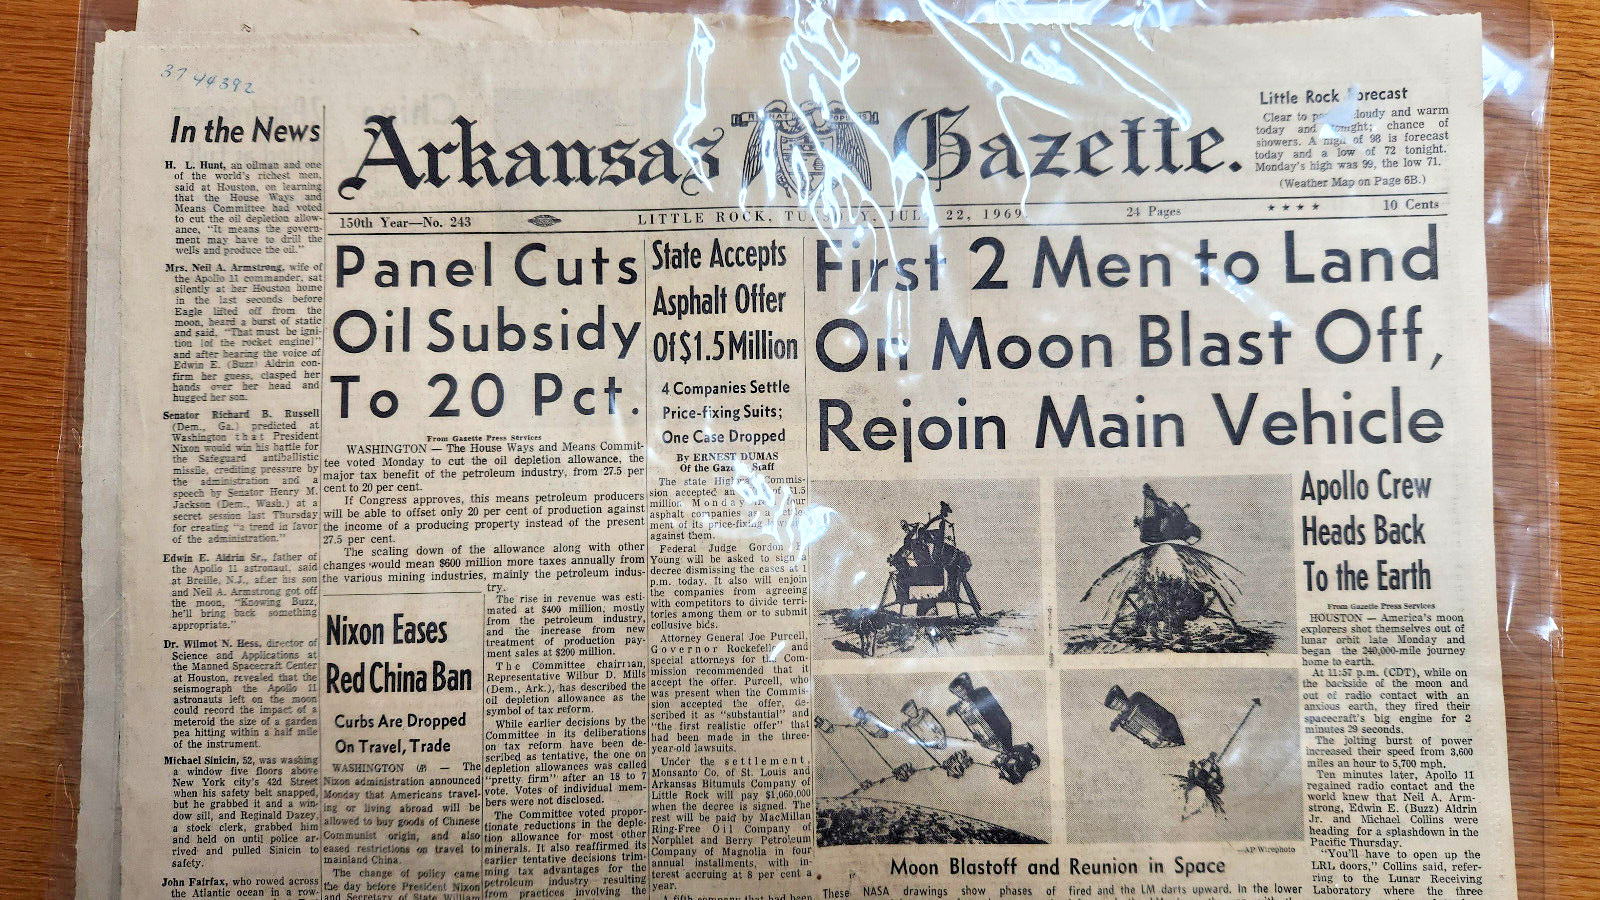 Arkansas Gazette July 22 1969 Apollo crew return from moon, Nixon & China